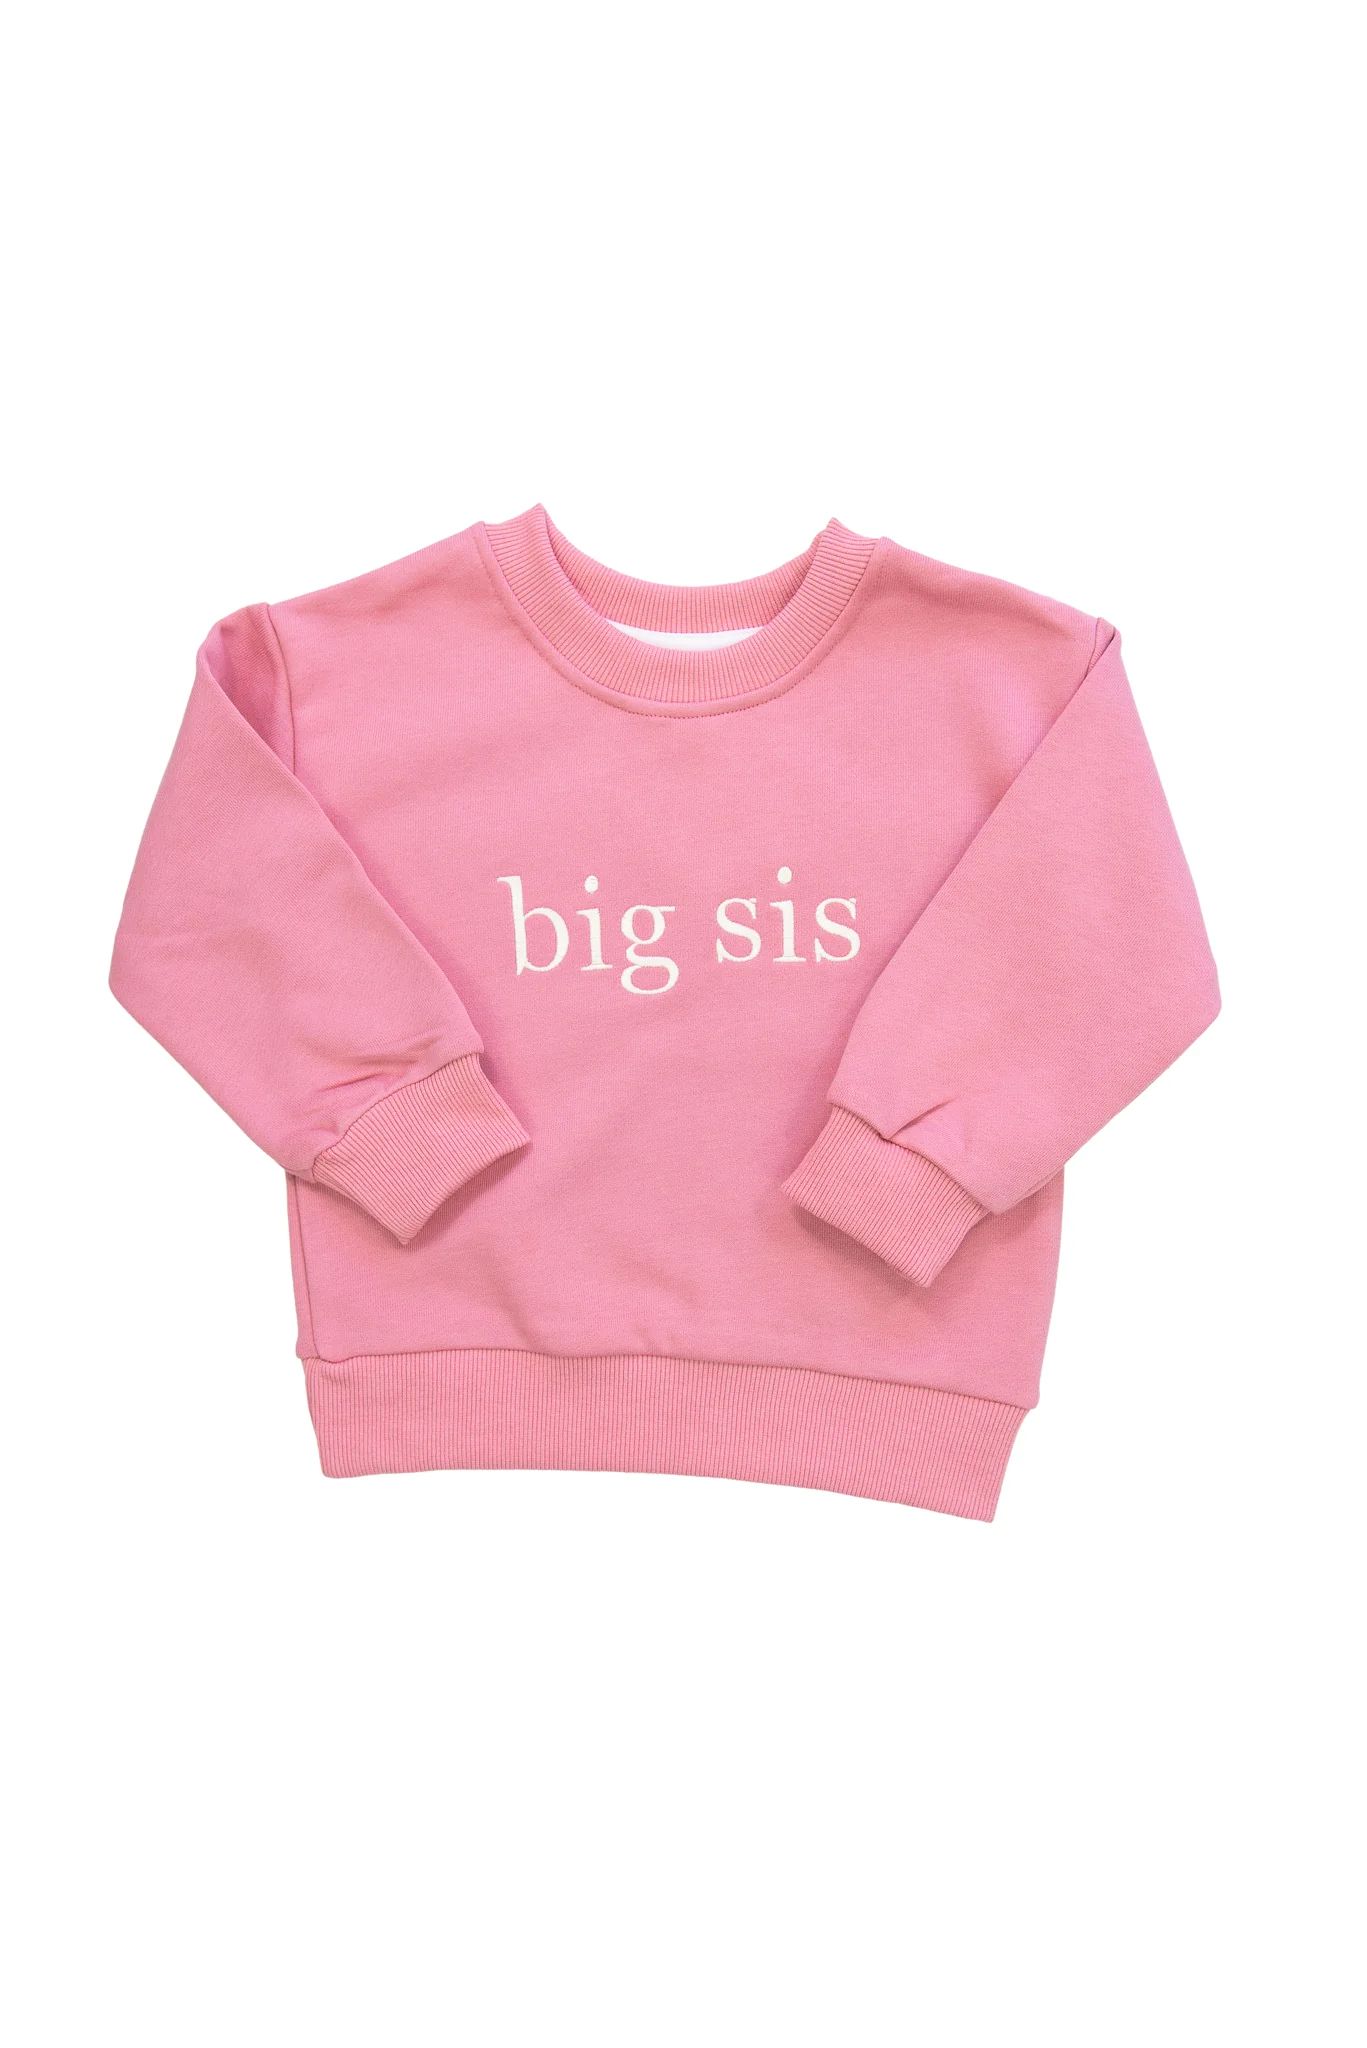 Girls Big Sis Sweatshirt | Sugar Dumplin' Kids